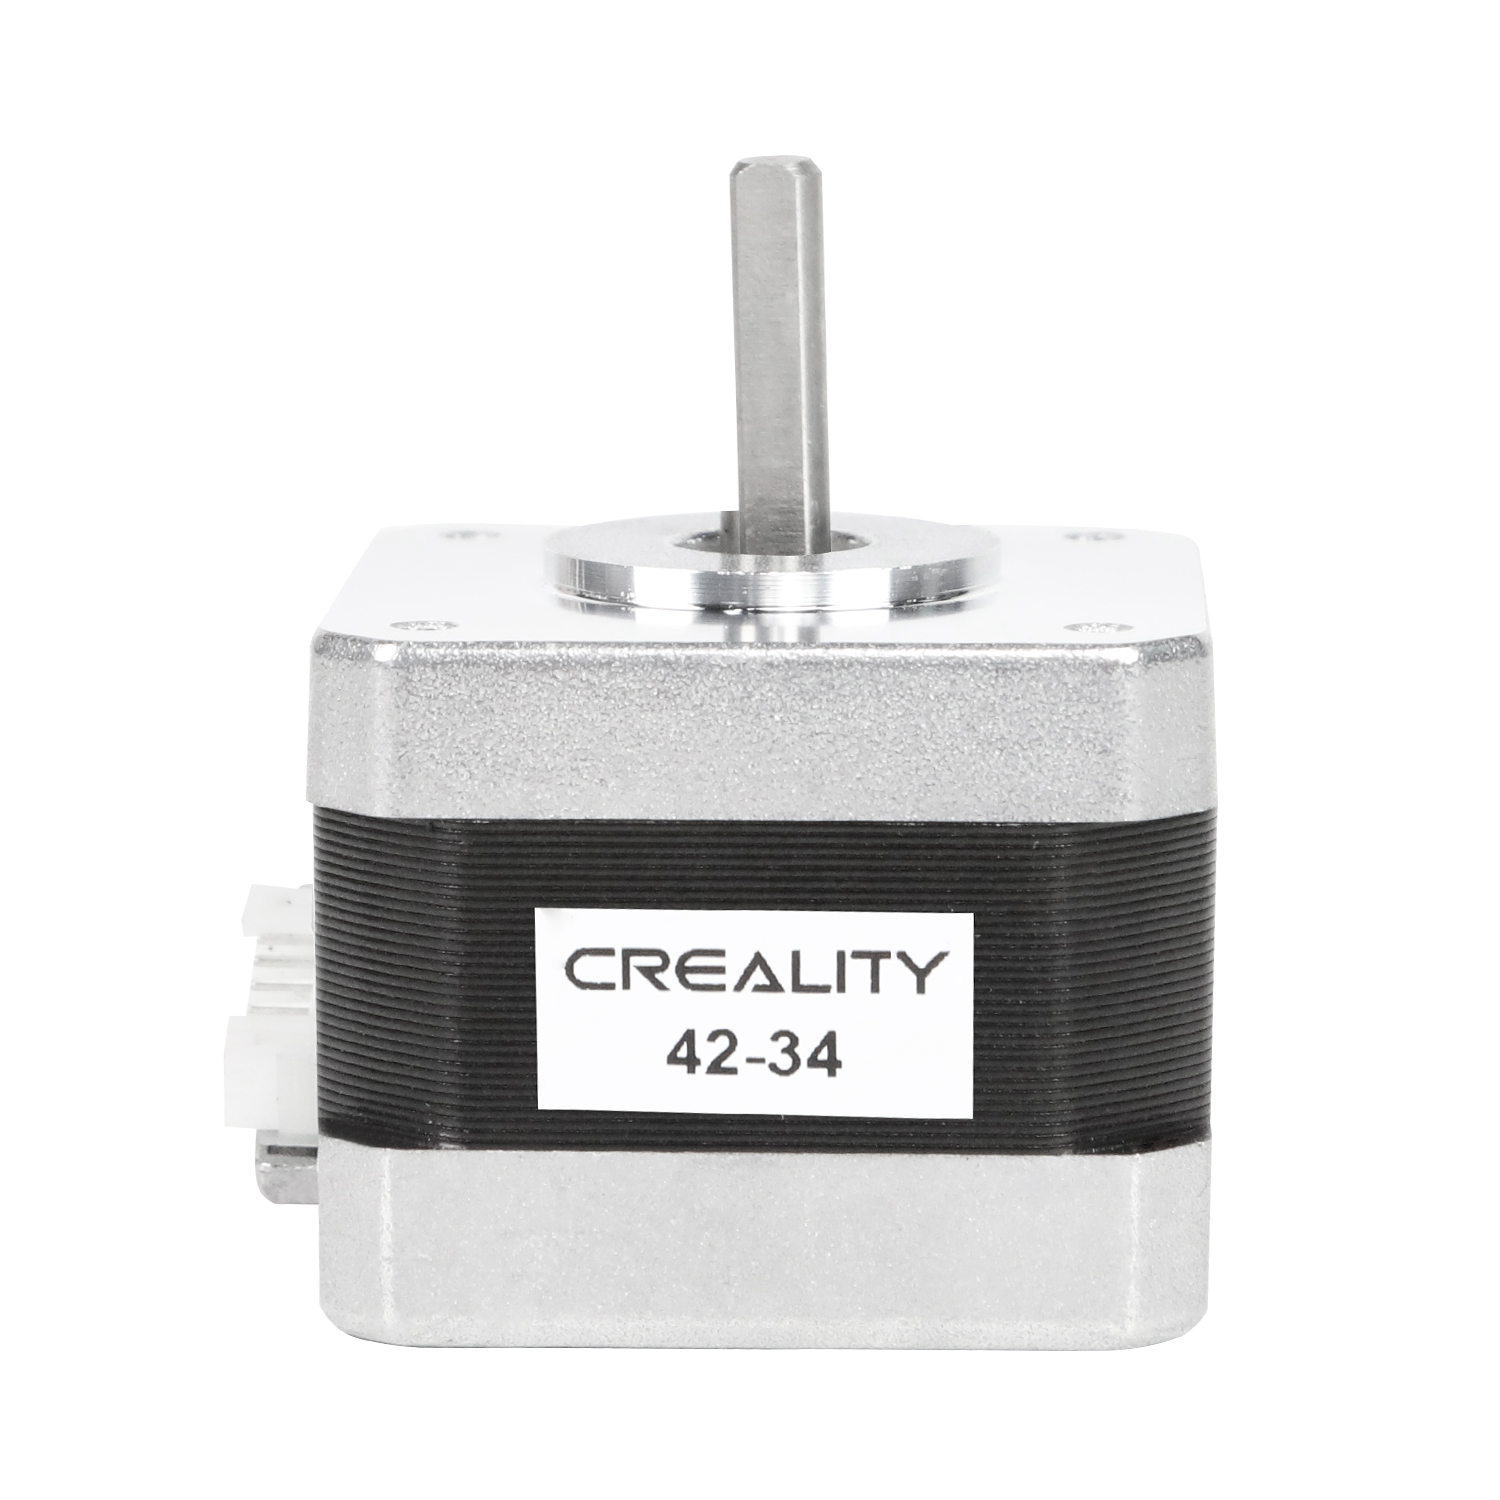 Creality 42-34 stepper motor